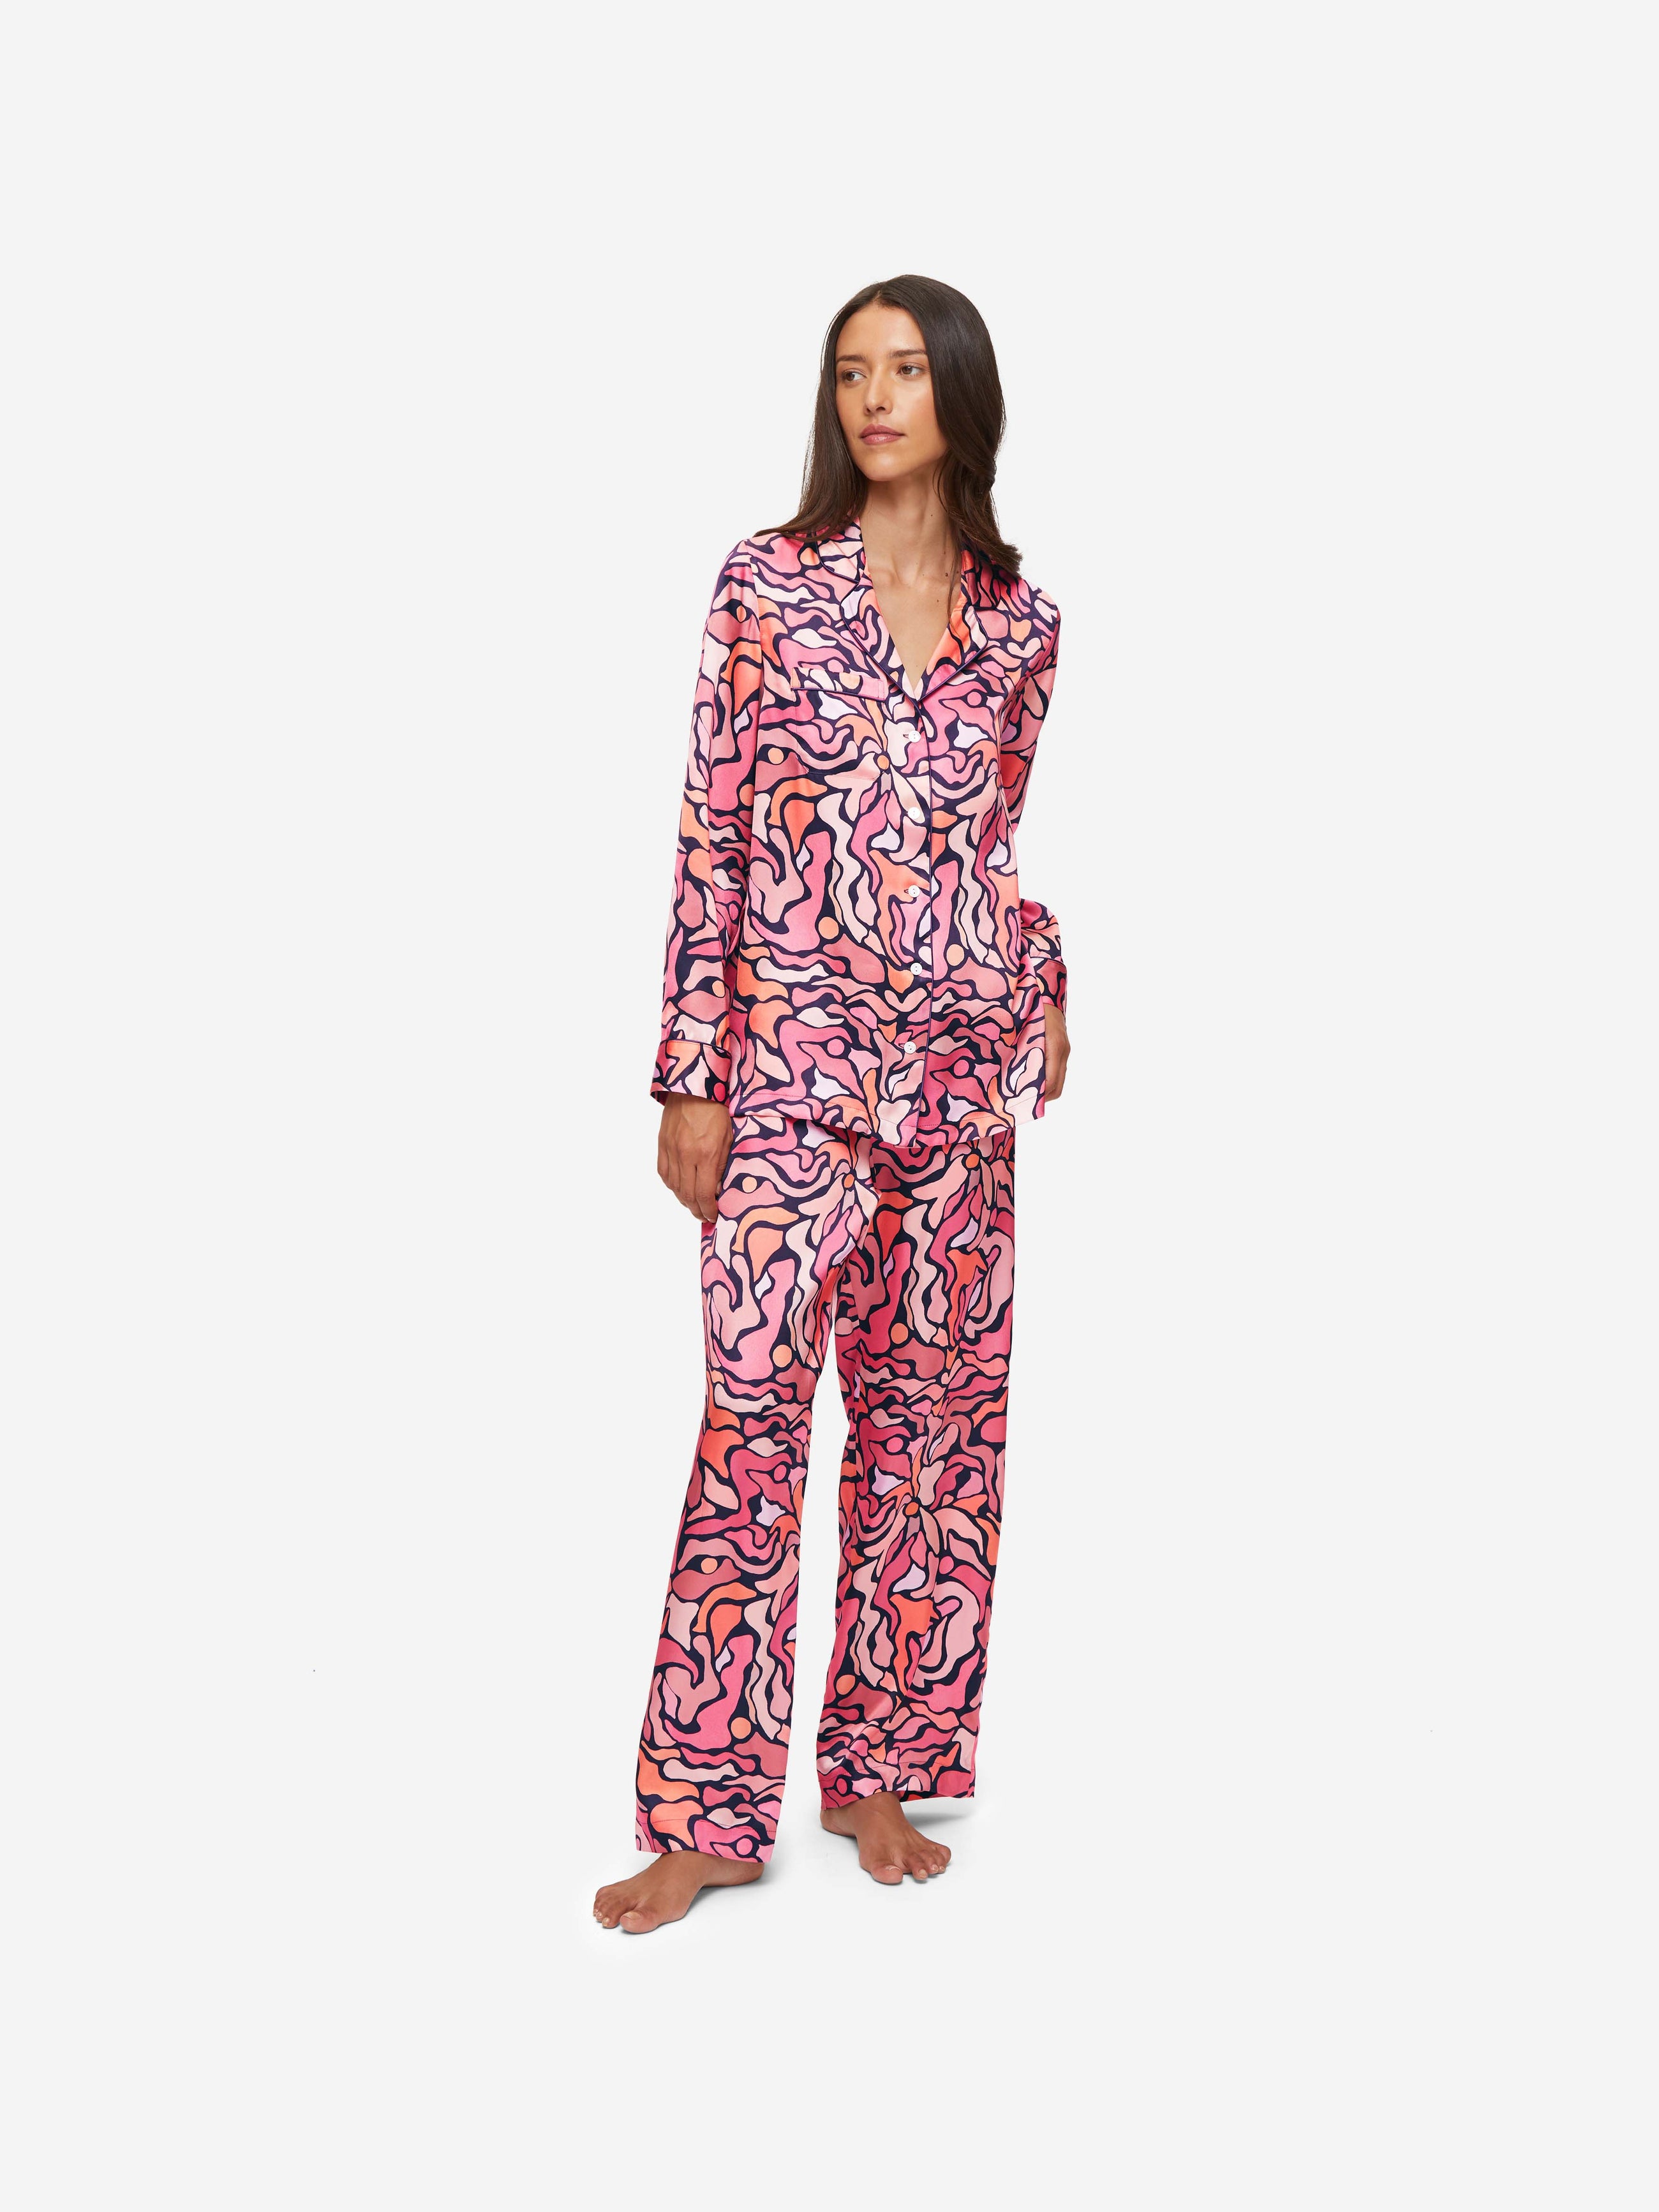 Women's Pyjamas Brindisi 85 Silk Satin Multi